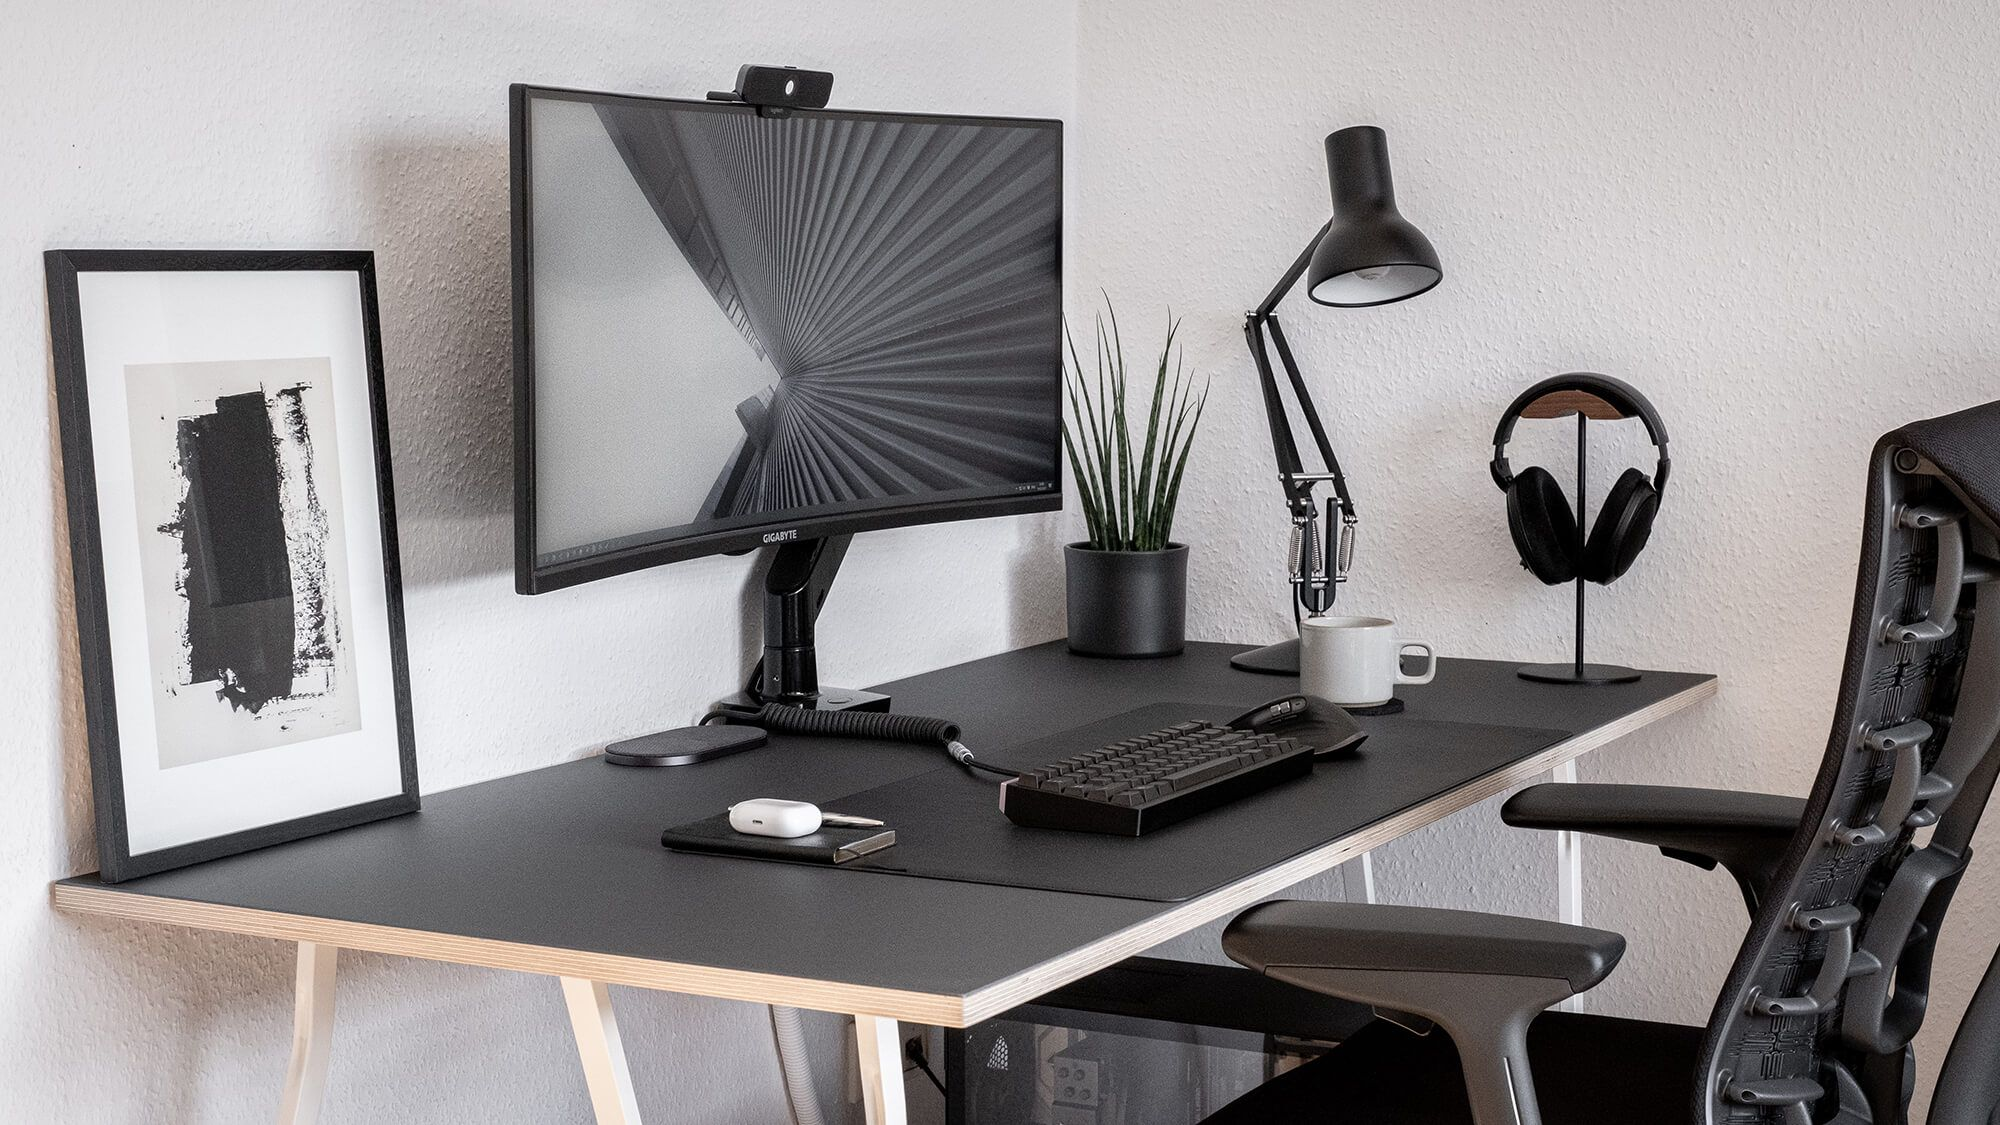 Minimalist black & white home office desk setup